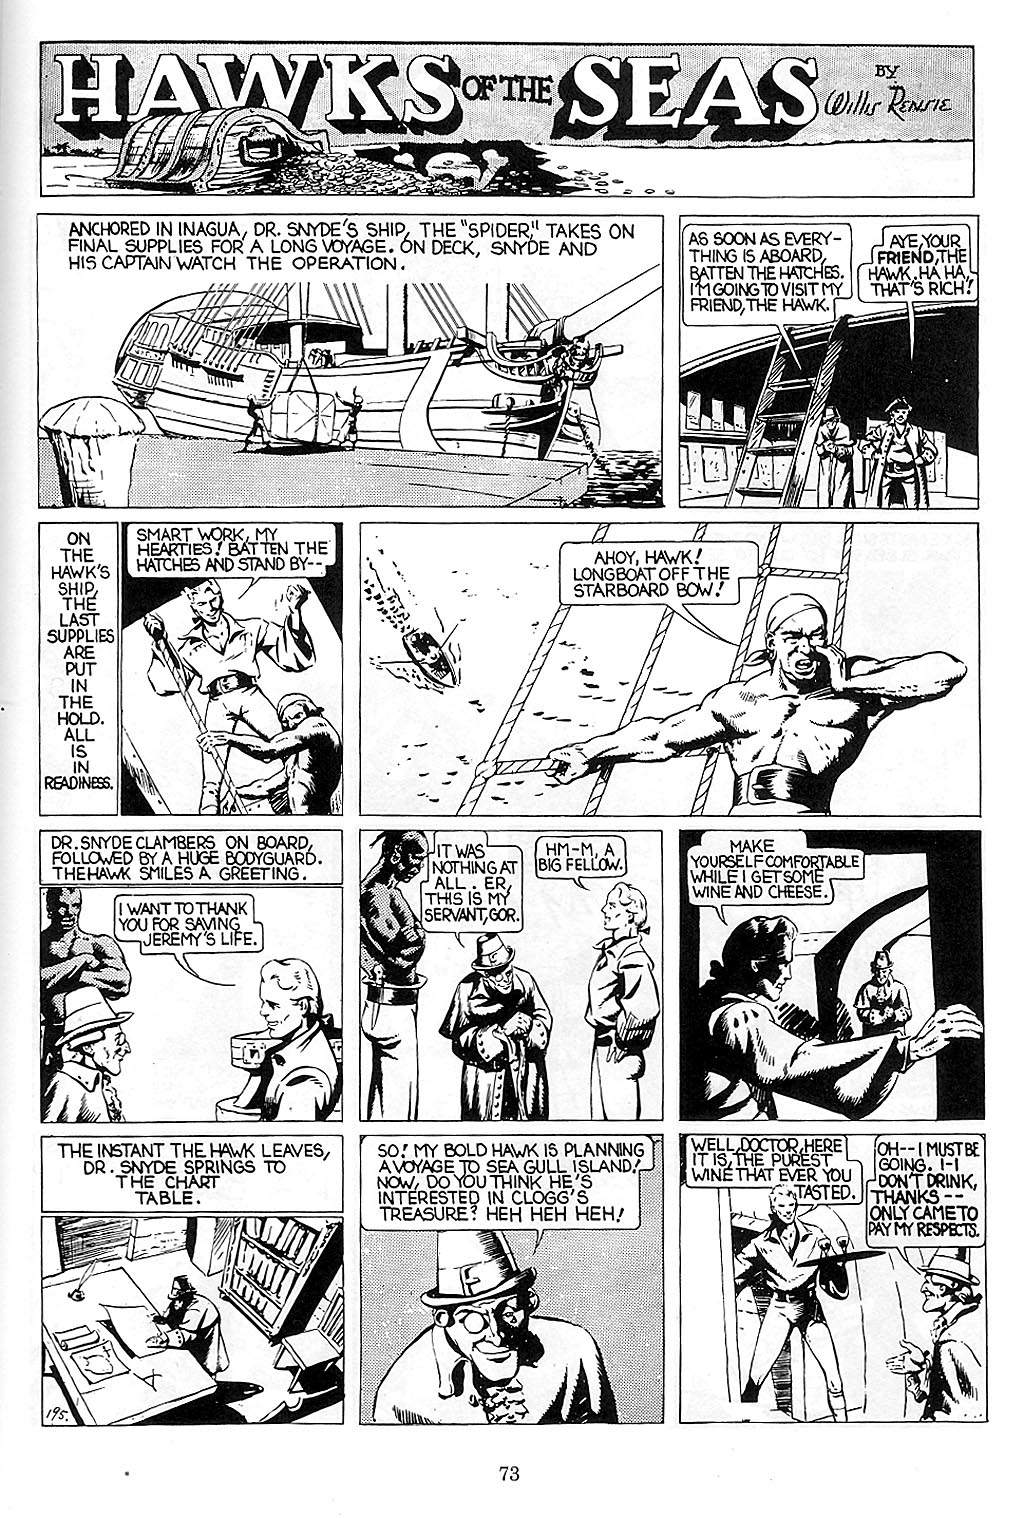 Read online Will Eisner's Hawks of the Seas comic -  Issue # TPB - 74